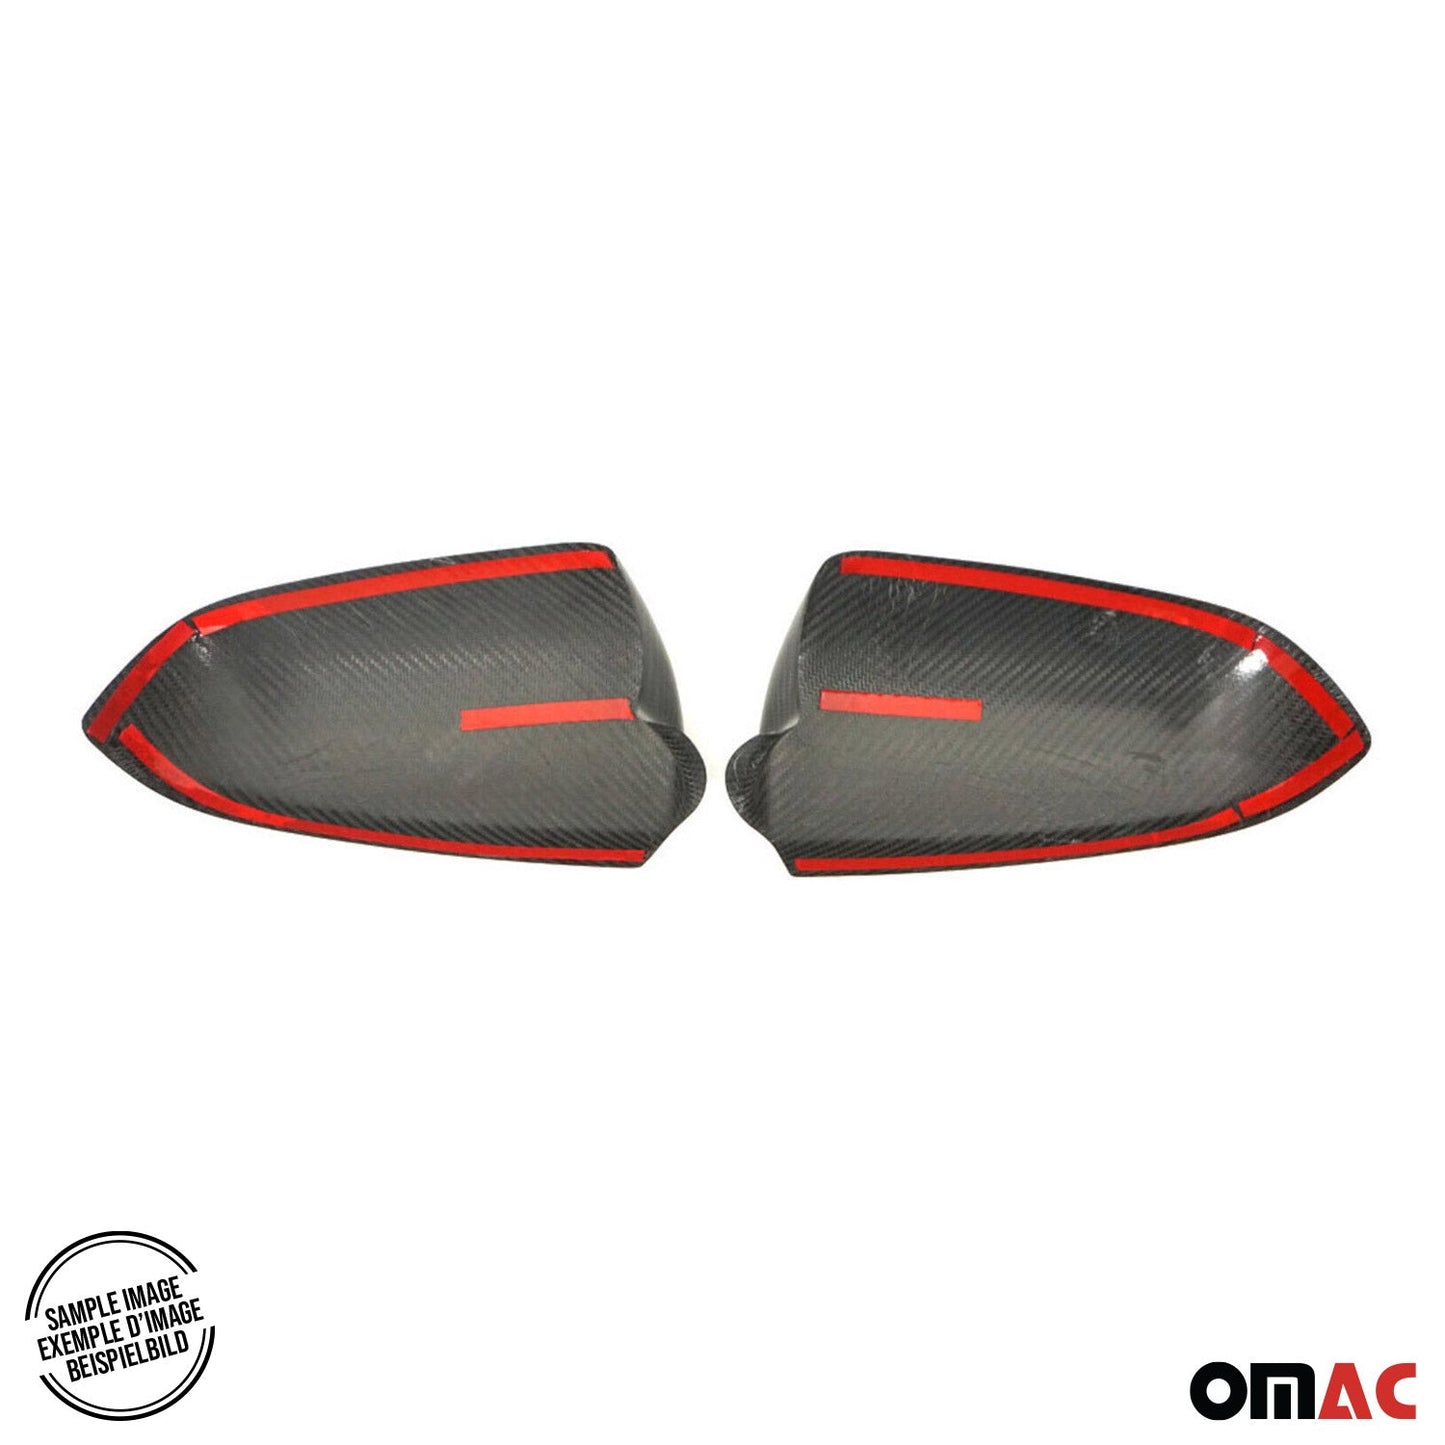 OMAC Fits BMW 3 Series F30 2012-2018 Genuine Carbon Fiber Side Mirror Cover Cap 2 Pcs U003397